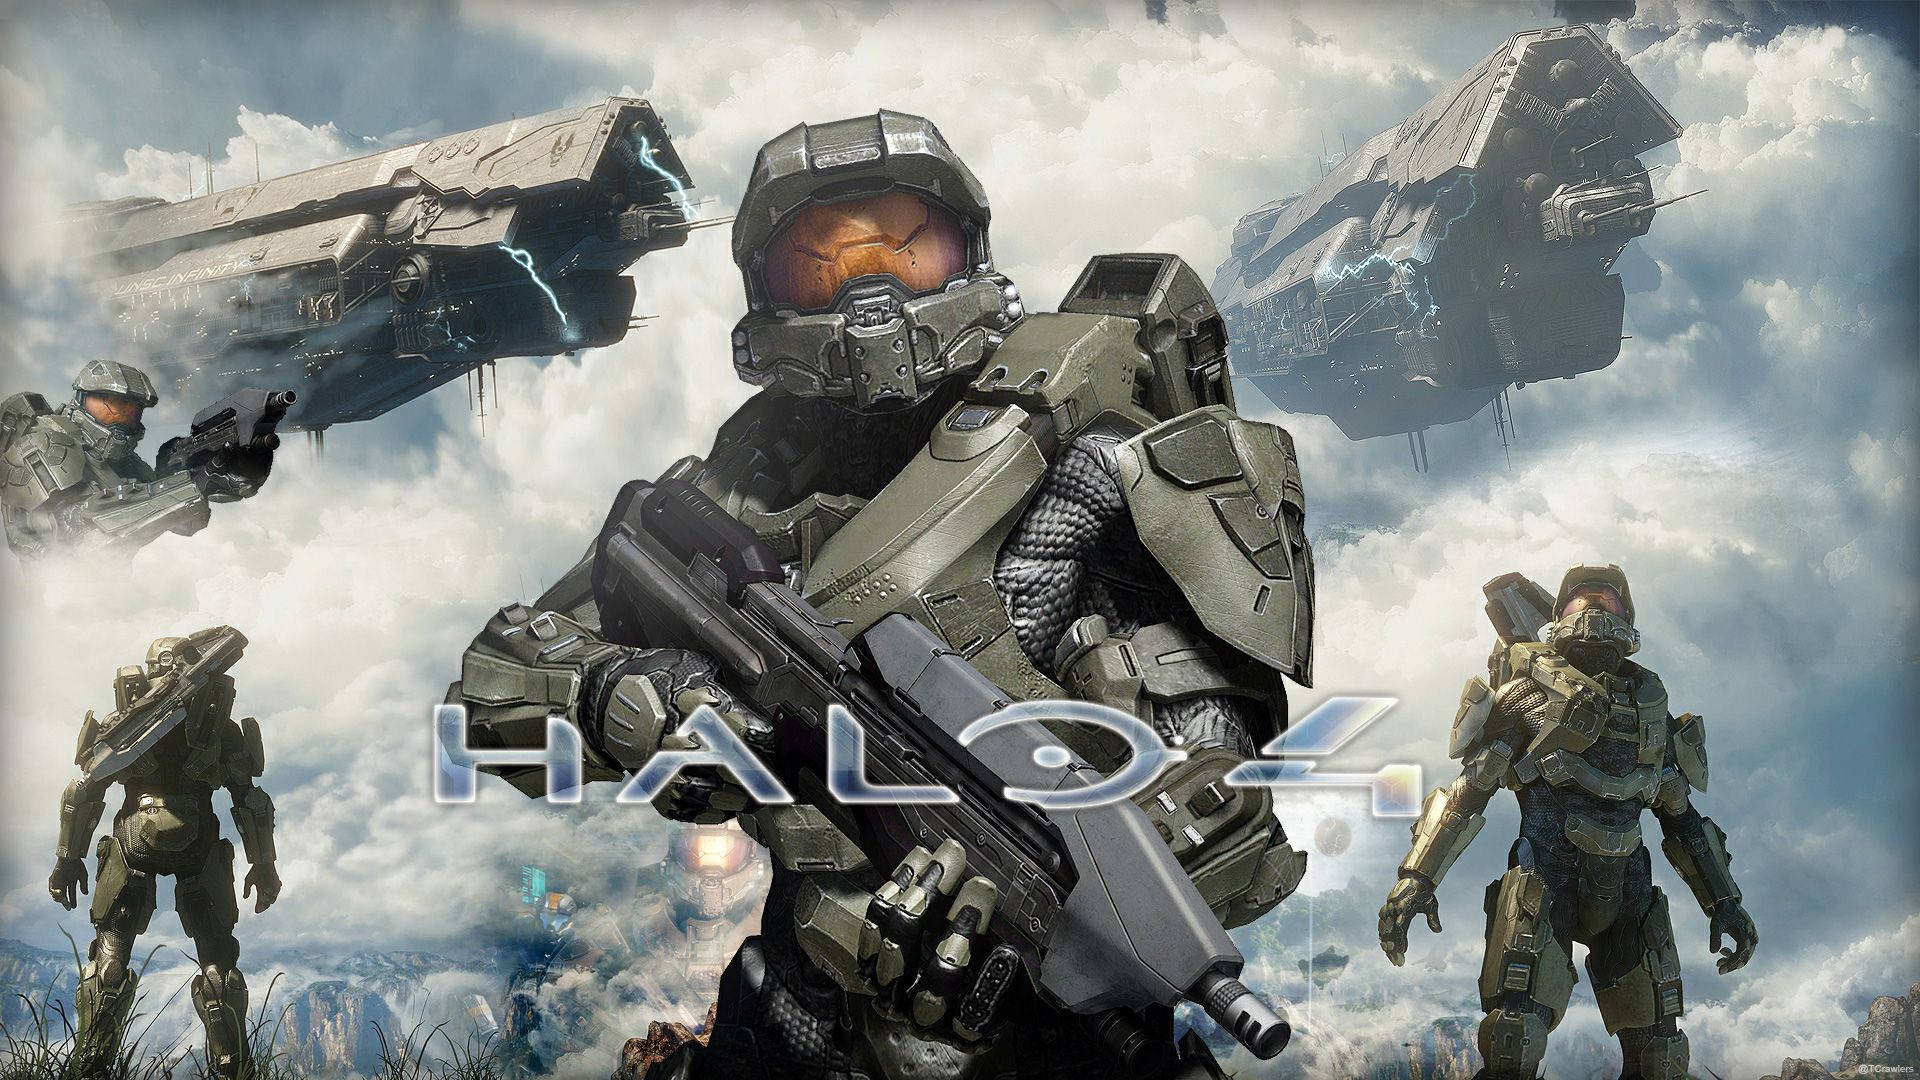 Halo Master Chief Background